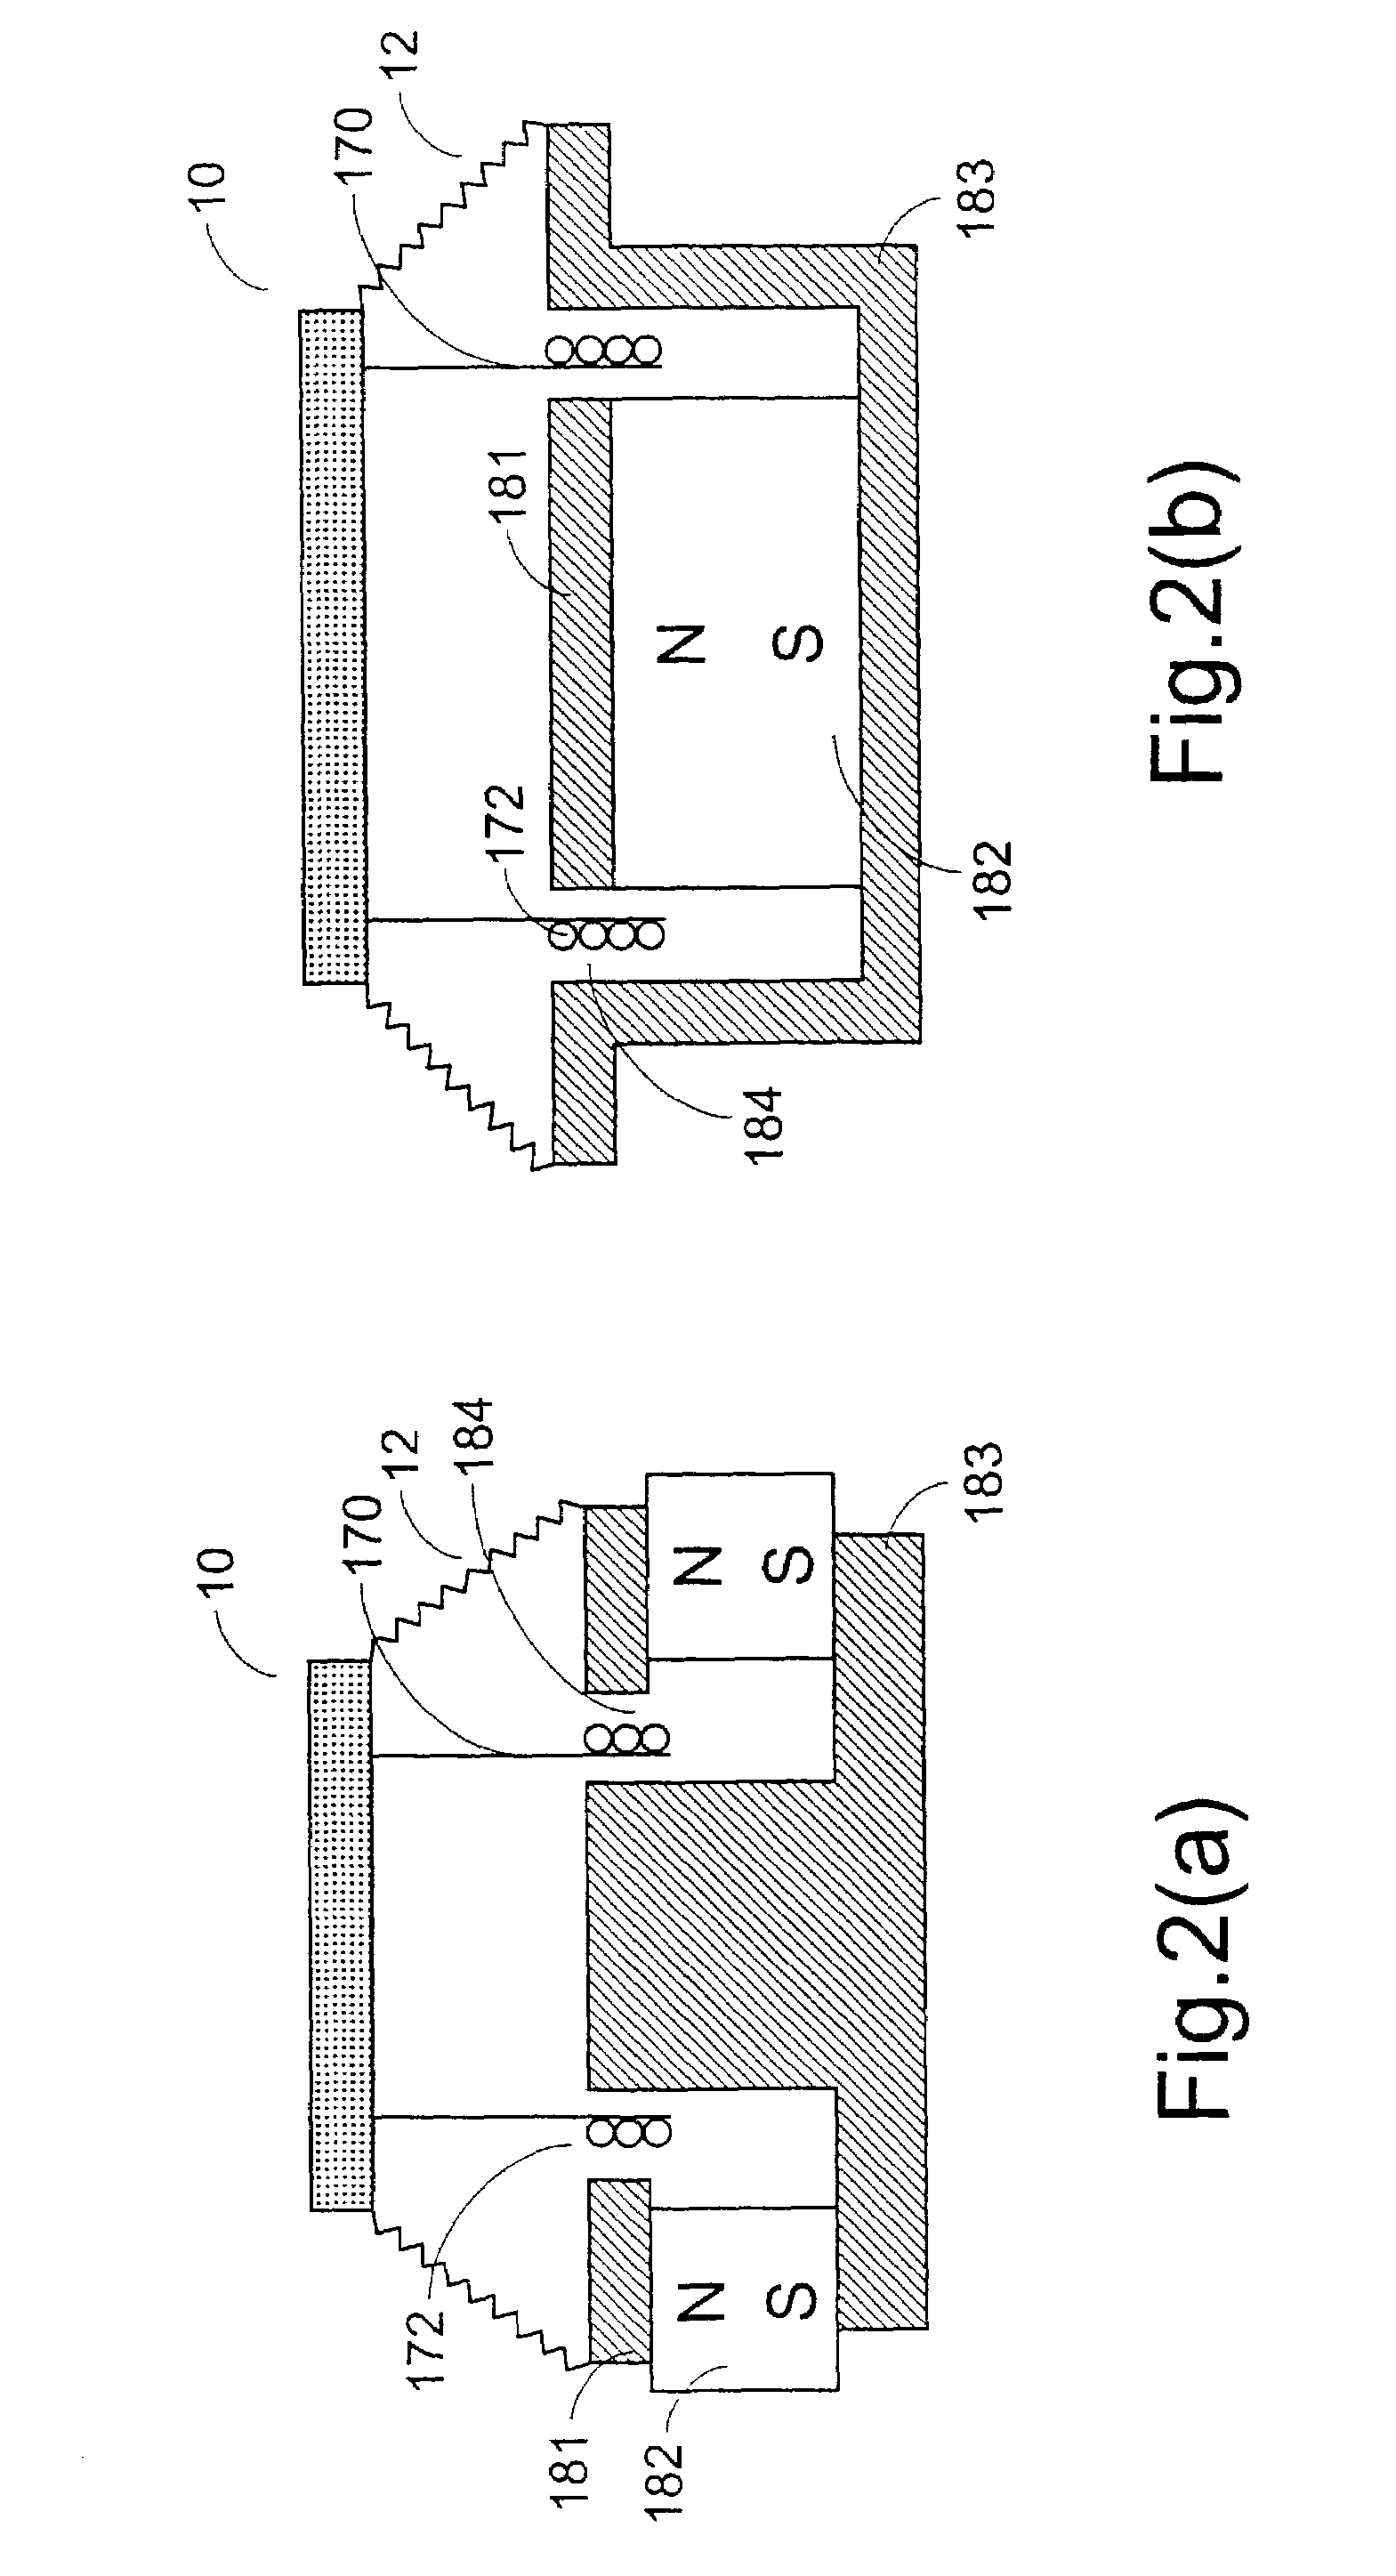 Rectangular panel-form loudspeaker and its radiating panel